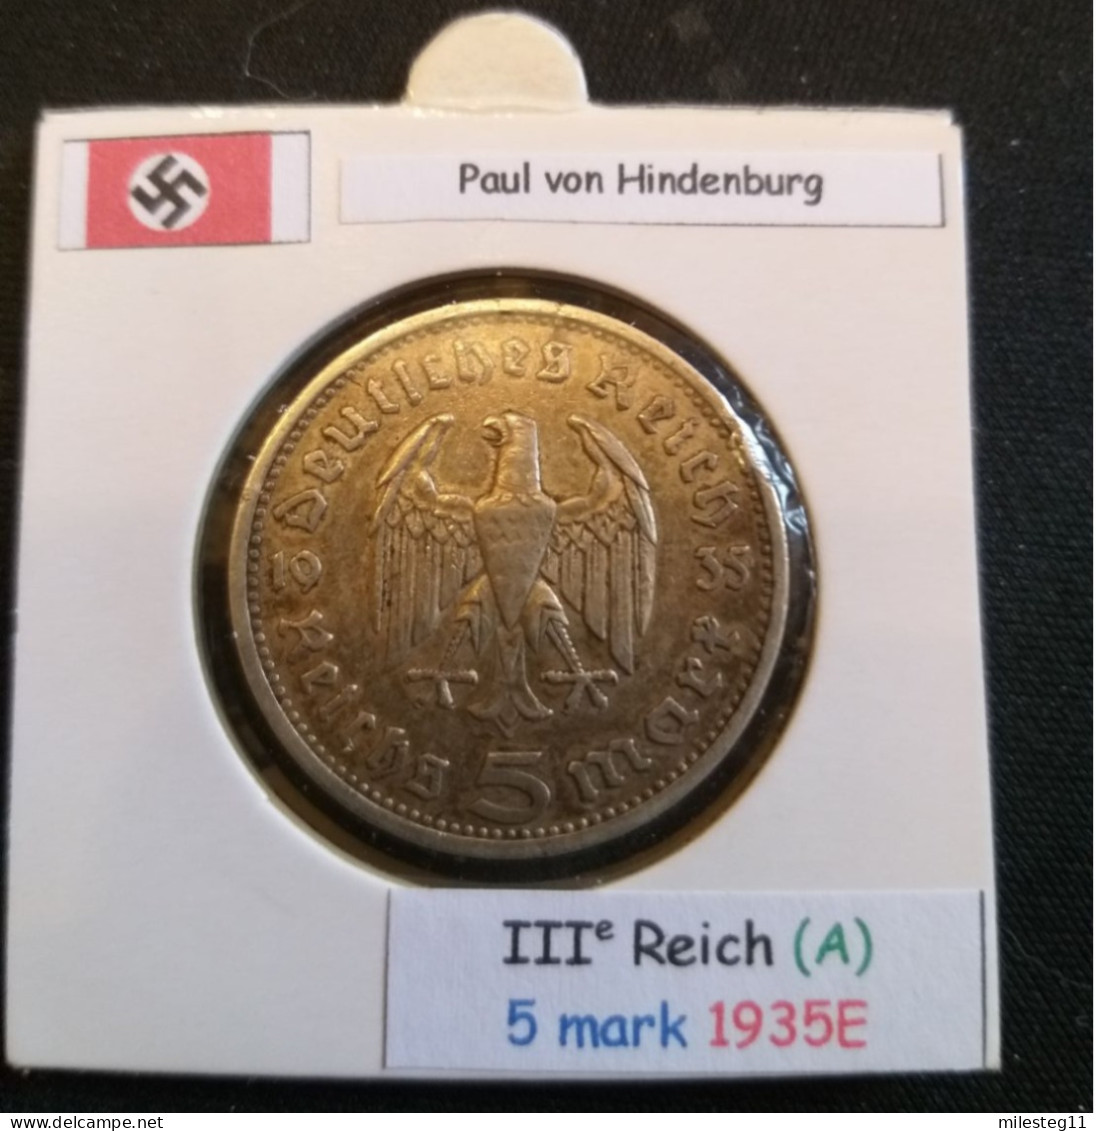 Pièce De 5 Reichsmark De 1935E (Muldenhütten) Paul Von Hindenburg (position A) - 5 Reichsmark